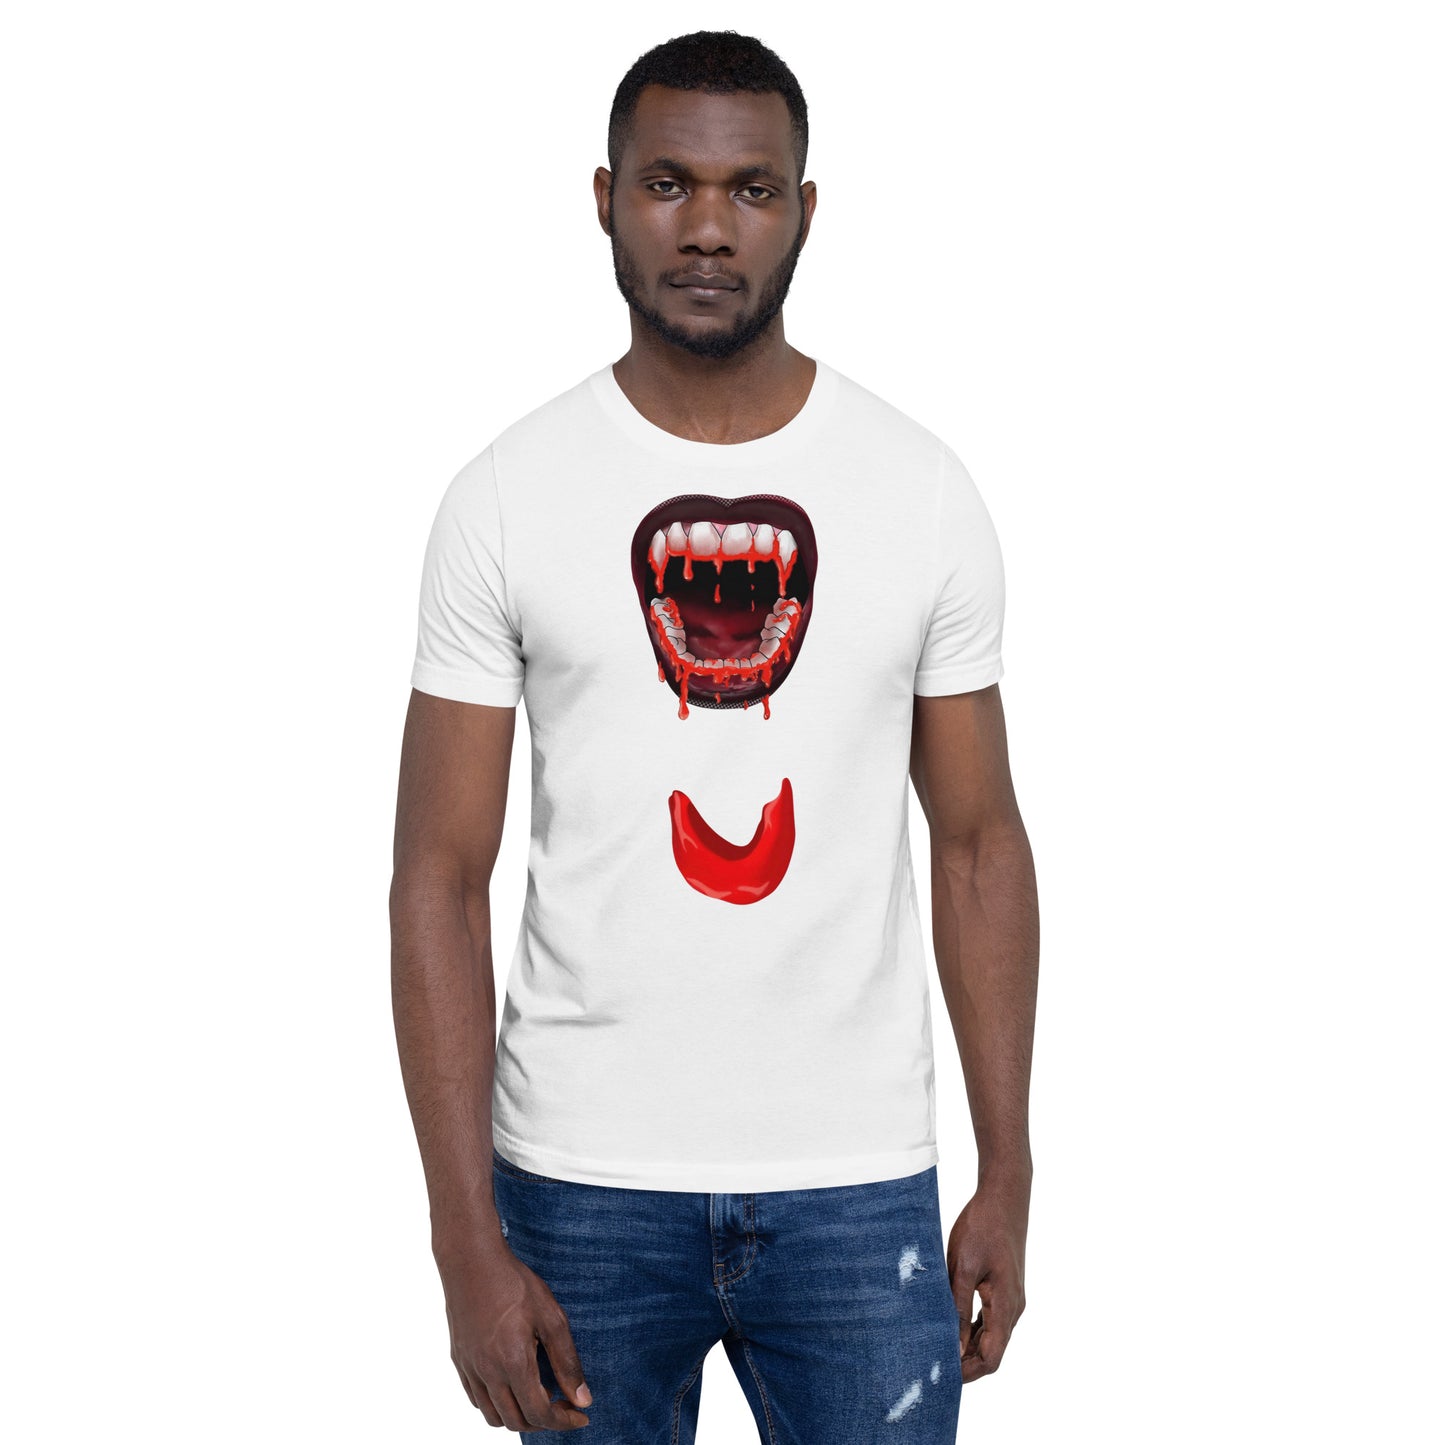 Vamp Life (Unisex t-shirt)